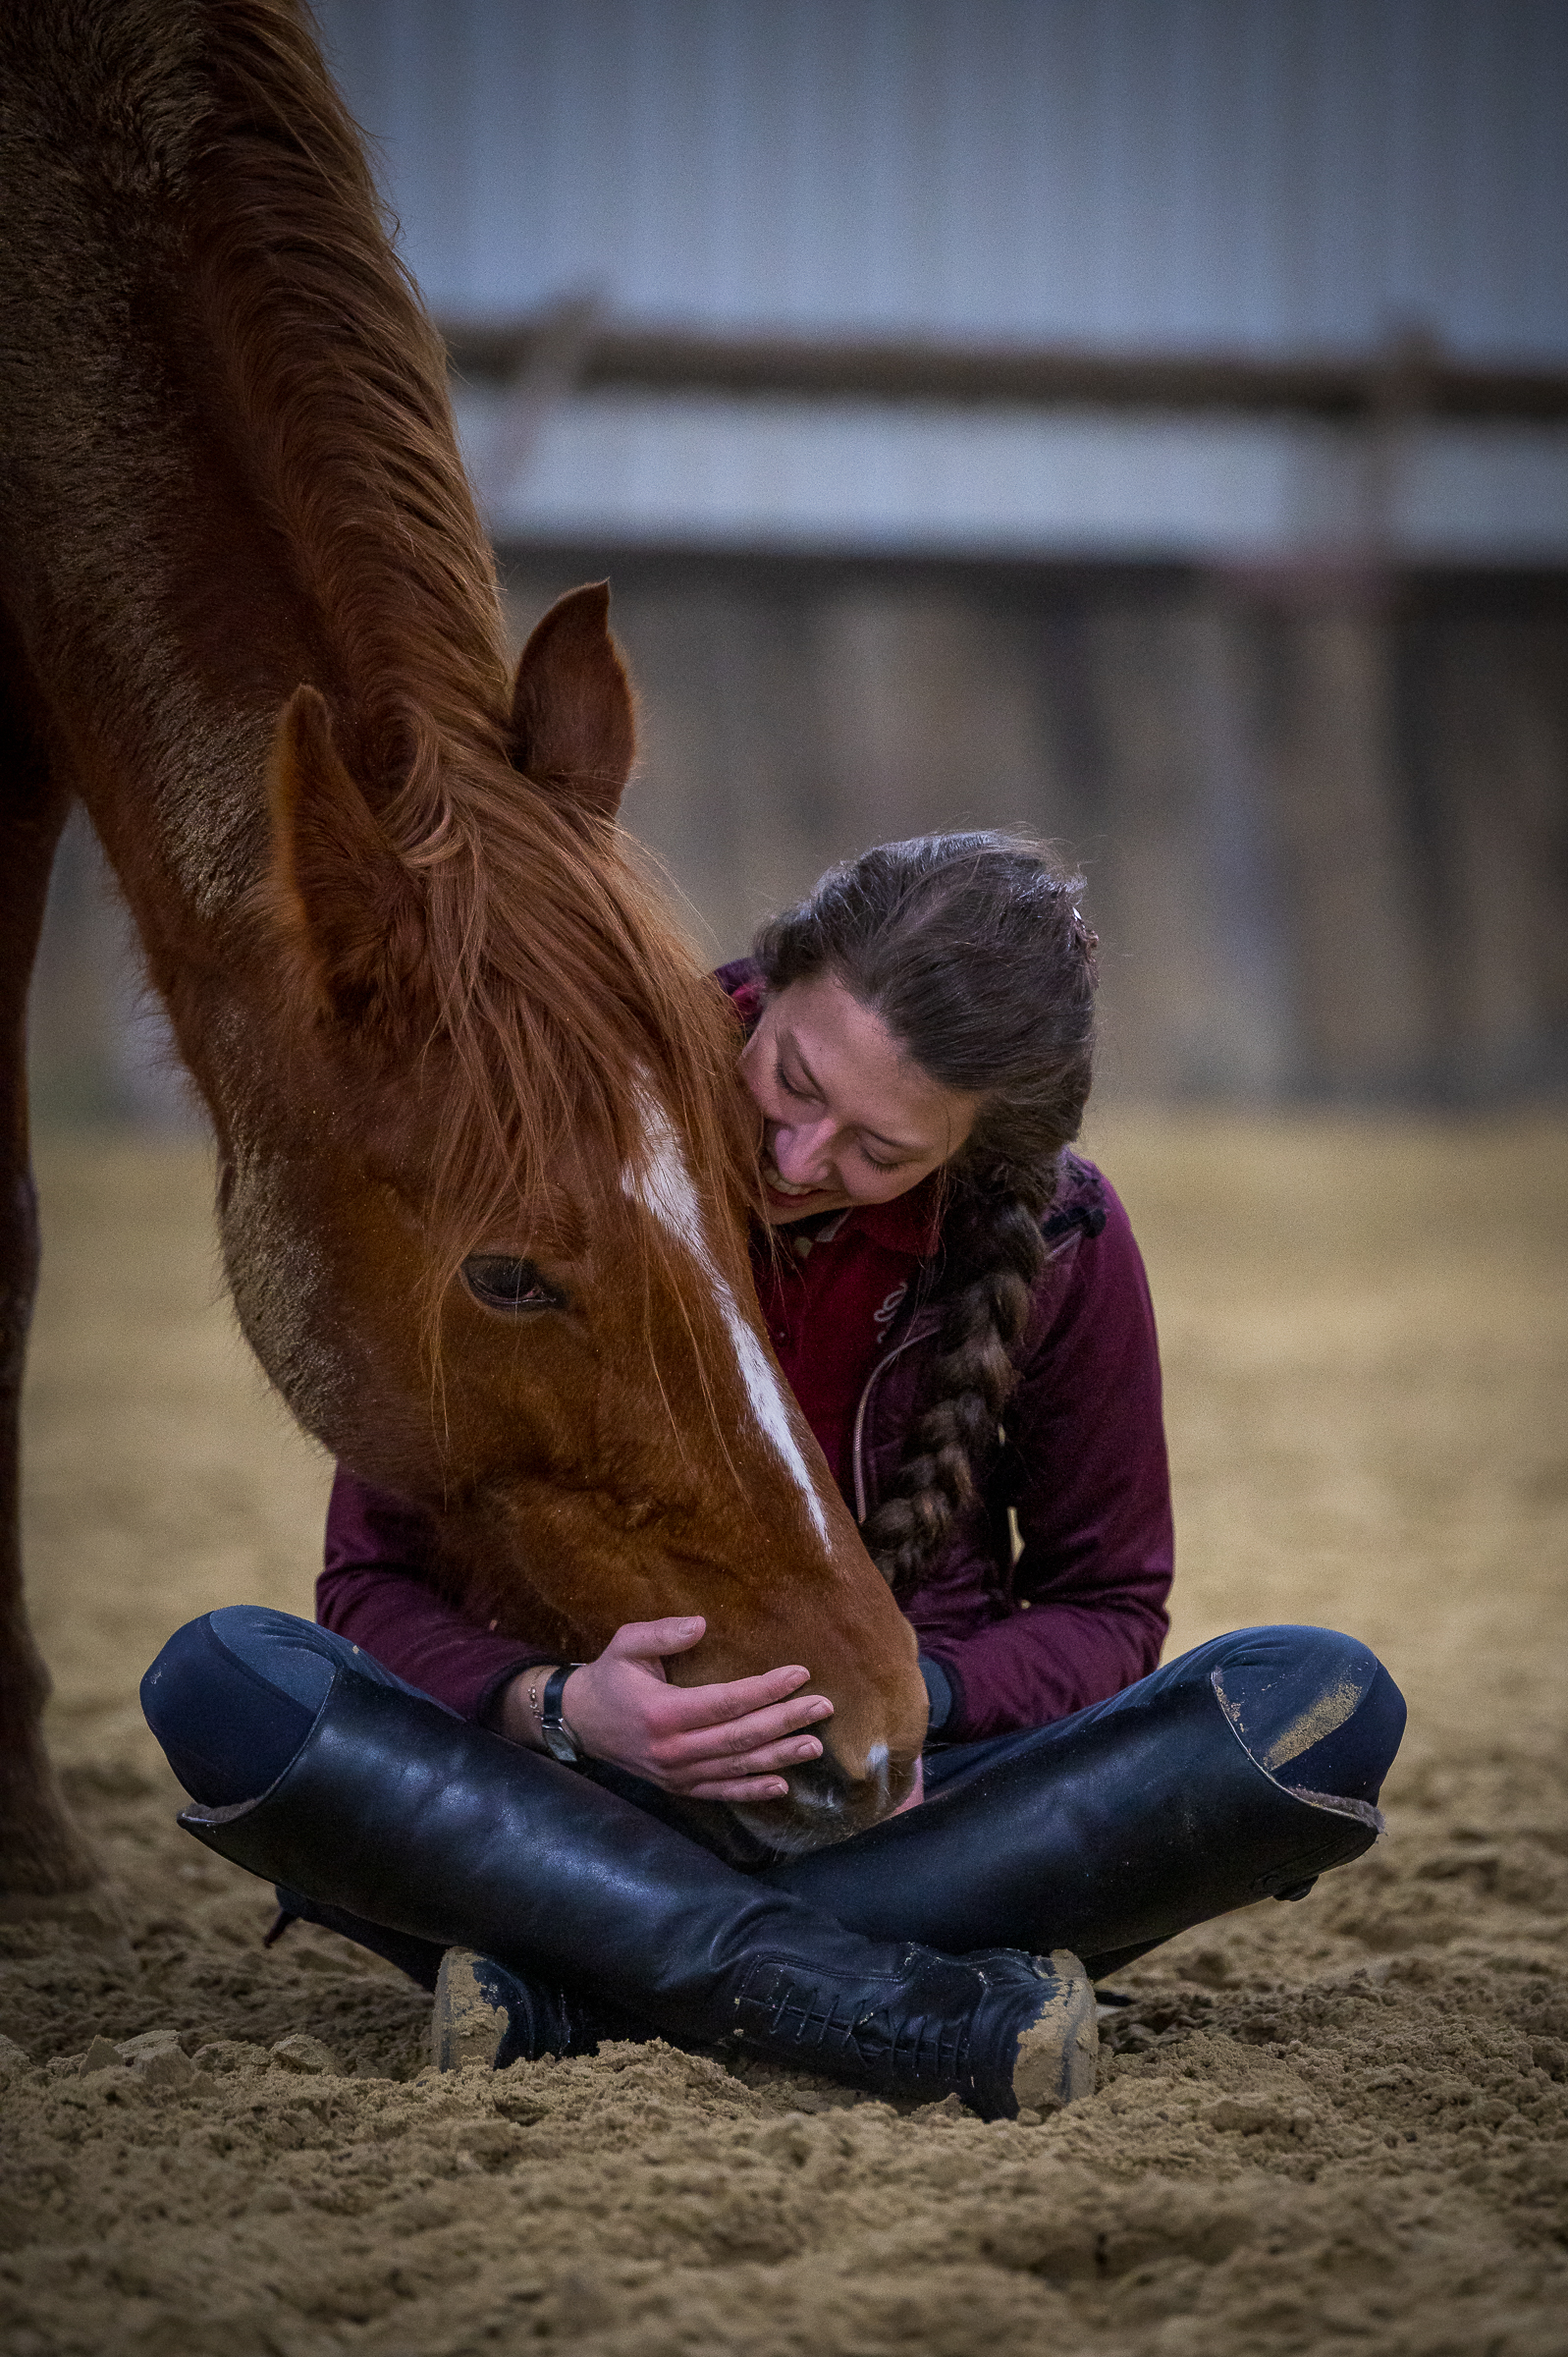 Mensch sitzt auf dem Boden Pferd senkt vertrauensvoll den Kopf zum Menschen.